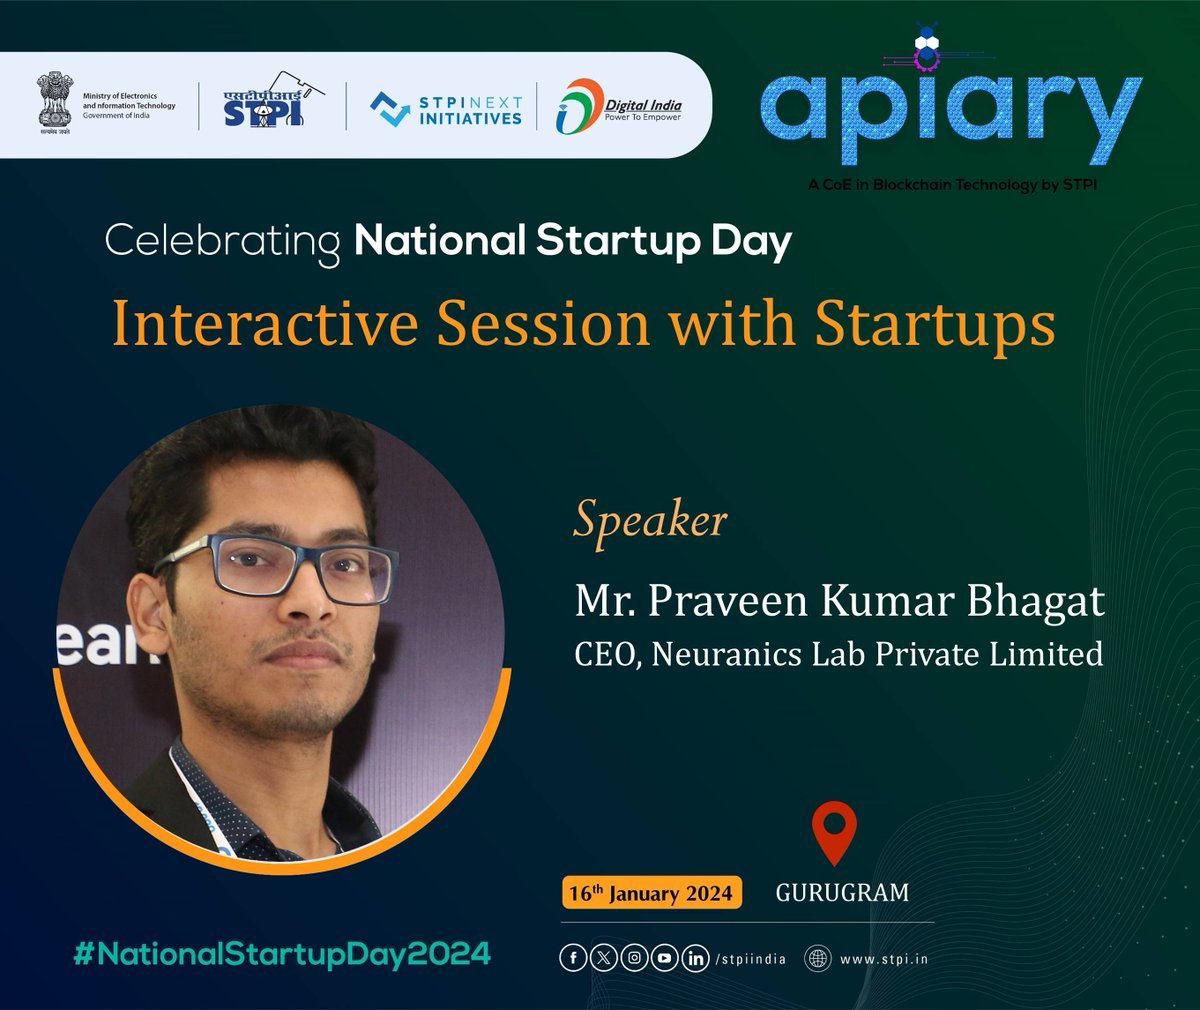 Mr. Praveen Kumar Bhagat, CEO @NeuranicsLab
will address the 'Interactive Session with Startups' on 16.01.24
#NationalStartupDay2024 #STPIStartupEcosystem  #STPIINDIA #YoungIndians
@_DigitalIndia @GoI_MeitY @MSH_MeitY
@startupindia @pankajthakar @Rajeev_GoI @arvindtw @purnmoon